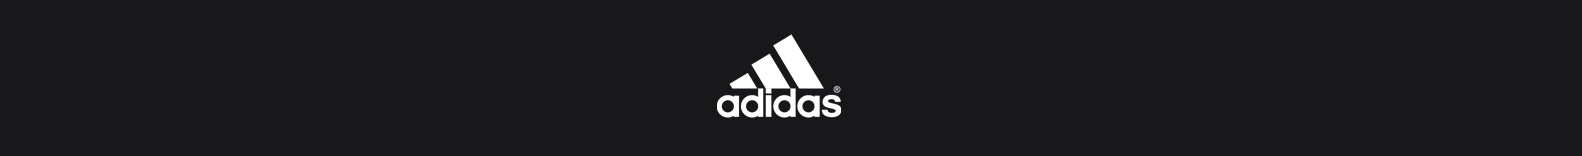 Adidas on Desktop - Logo